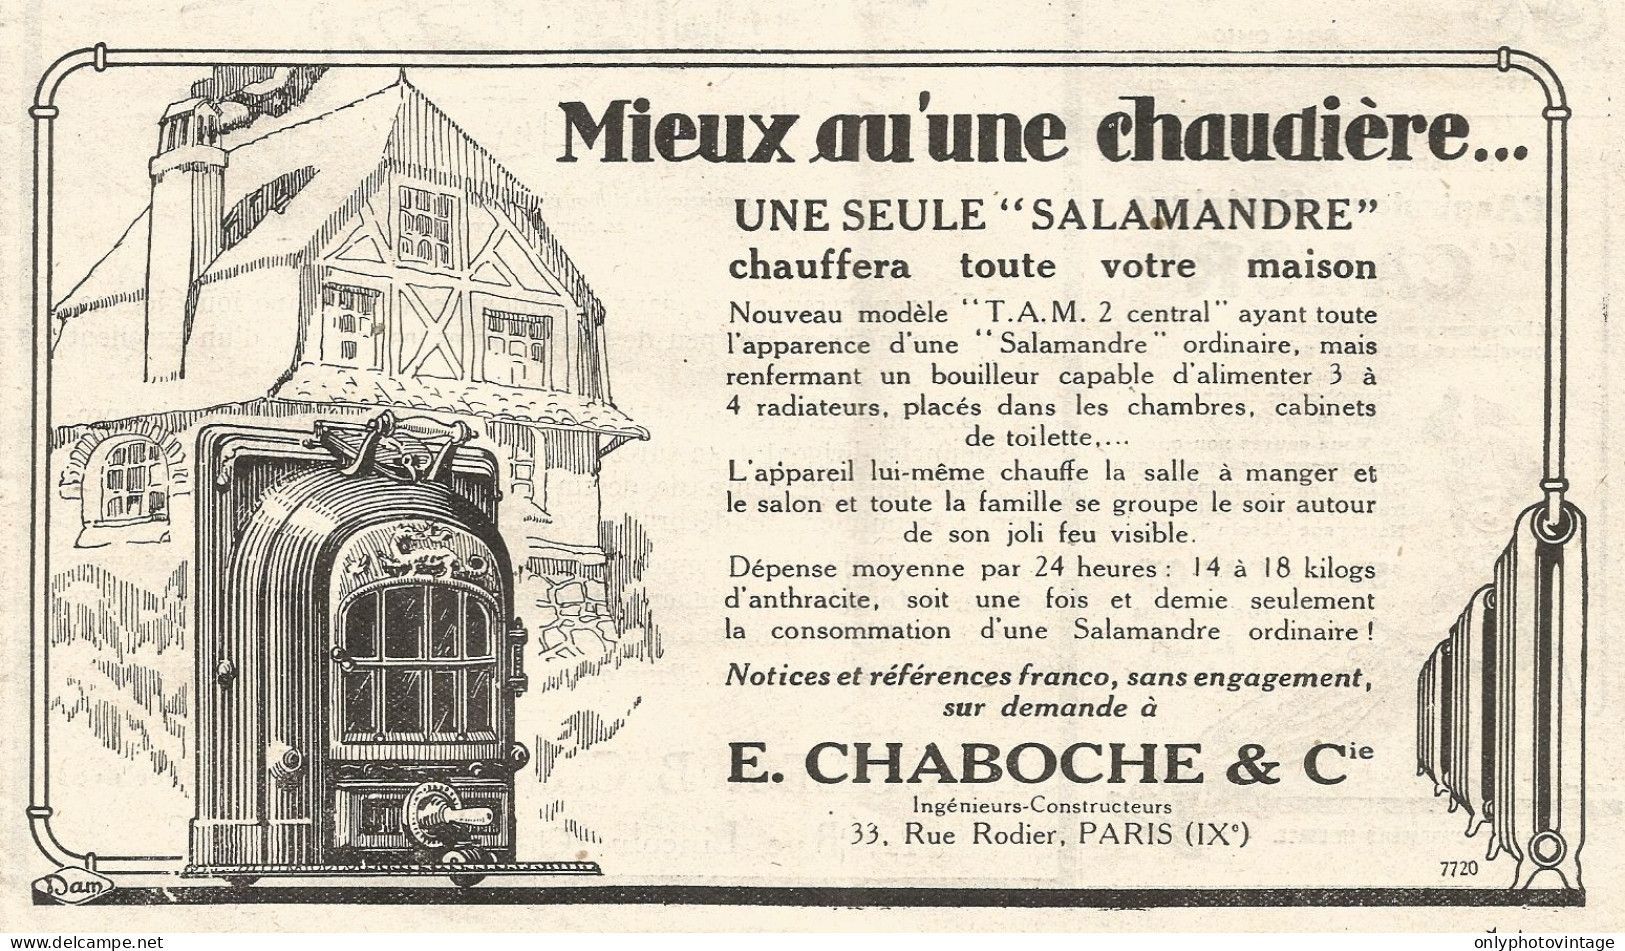 Caldaia SALAMANDRE Modello T.A.M. 2 Central - Pubblicitï¿½ Del 1926 - Old Ad - Advertising